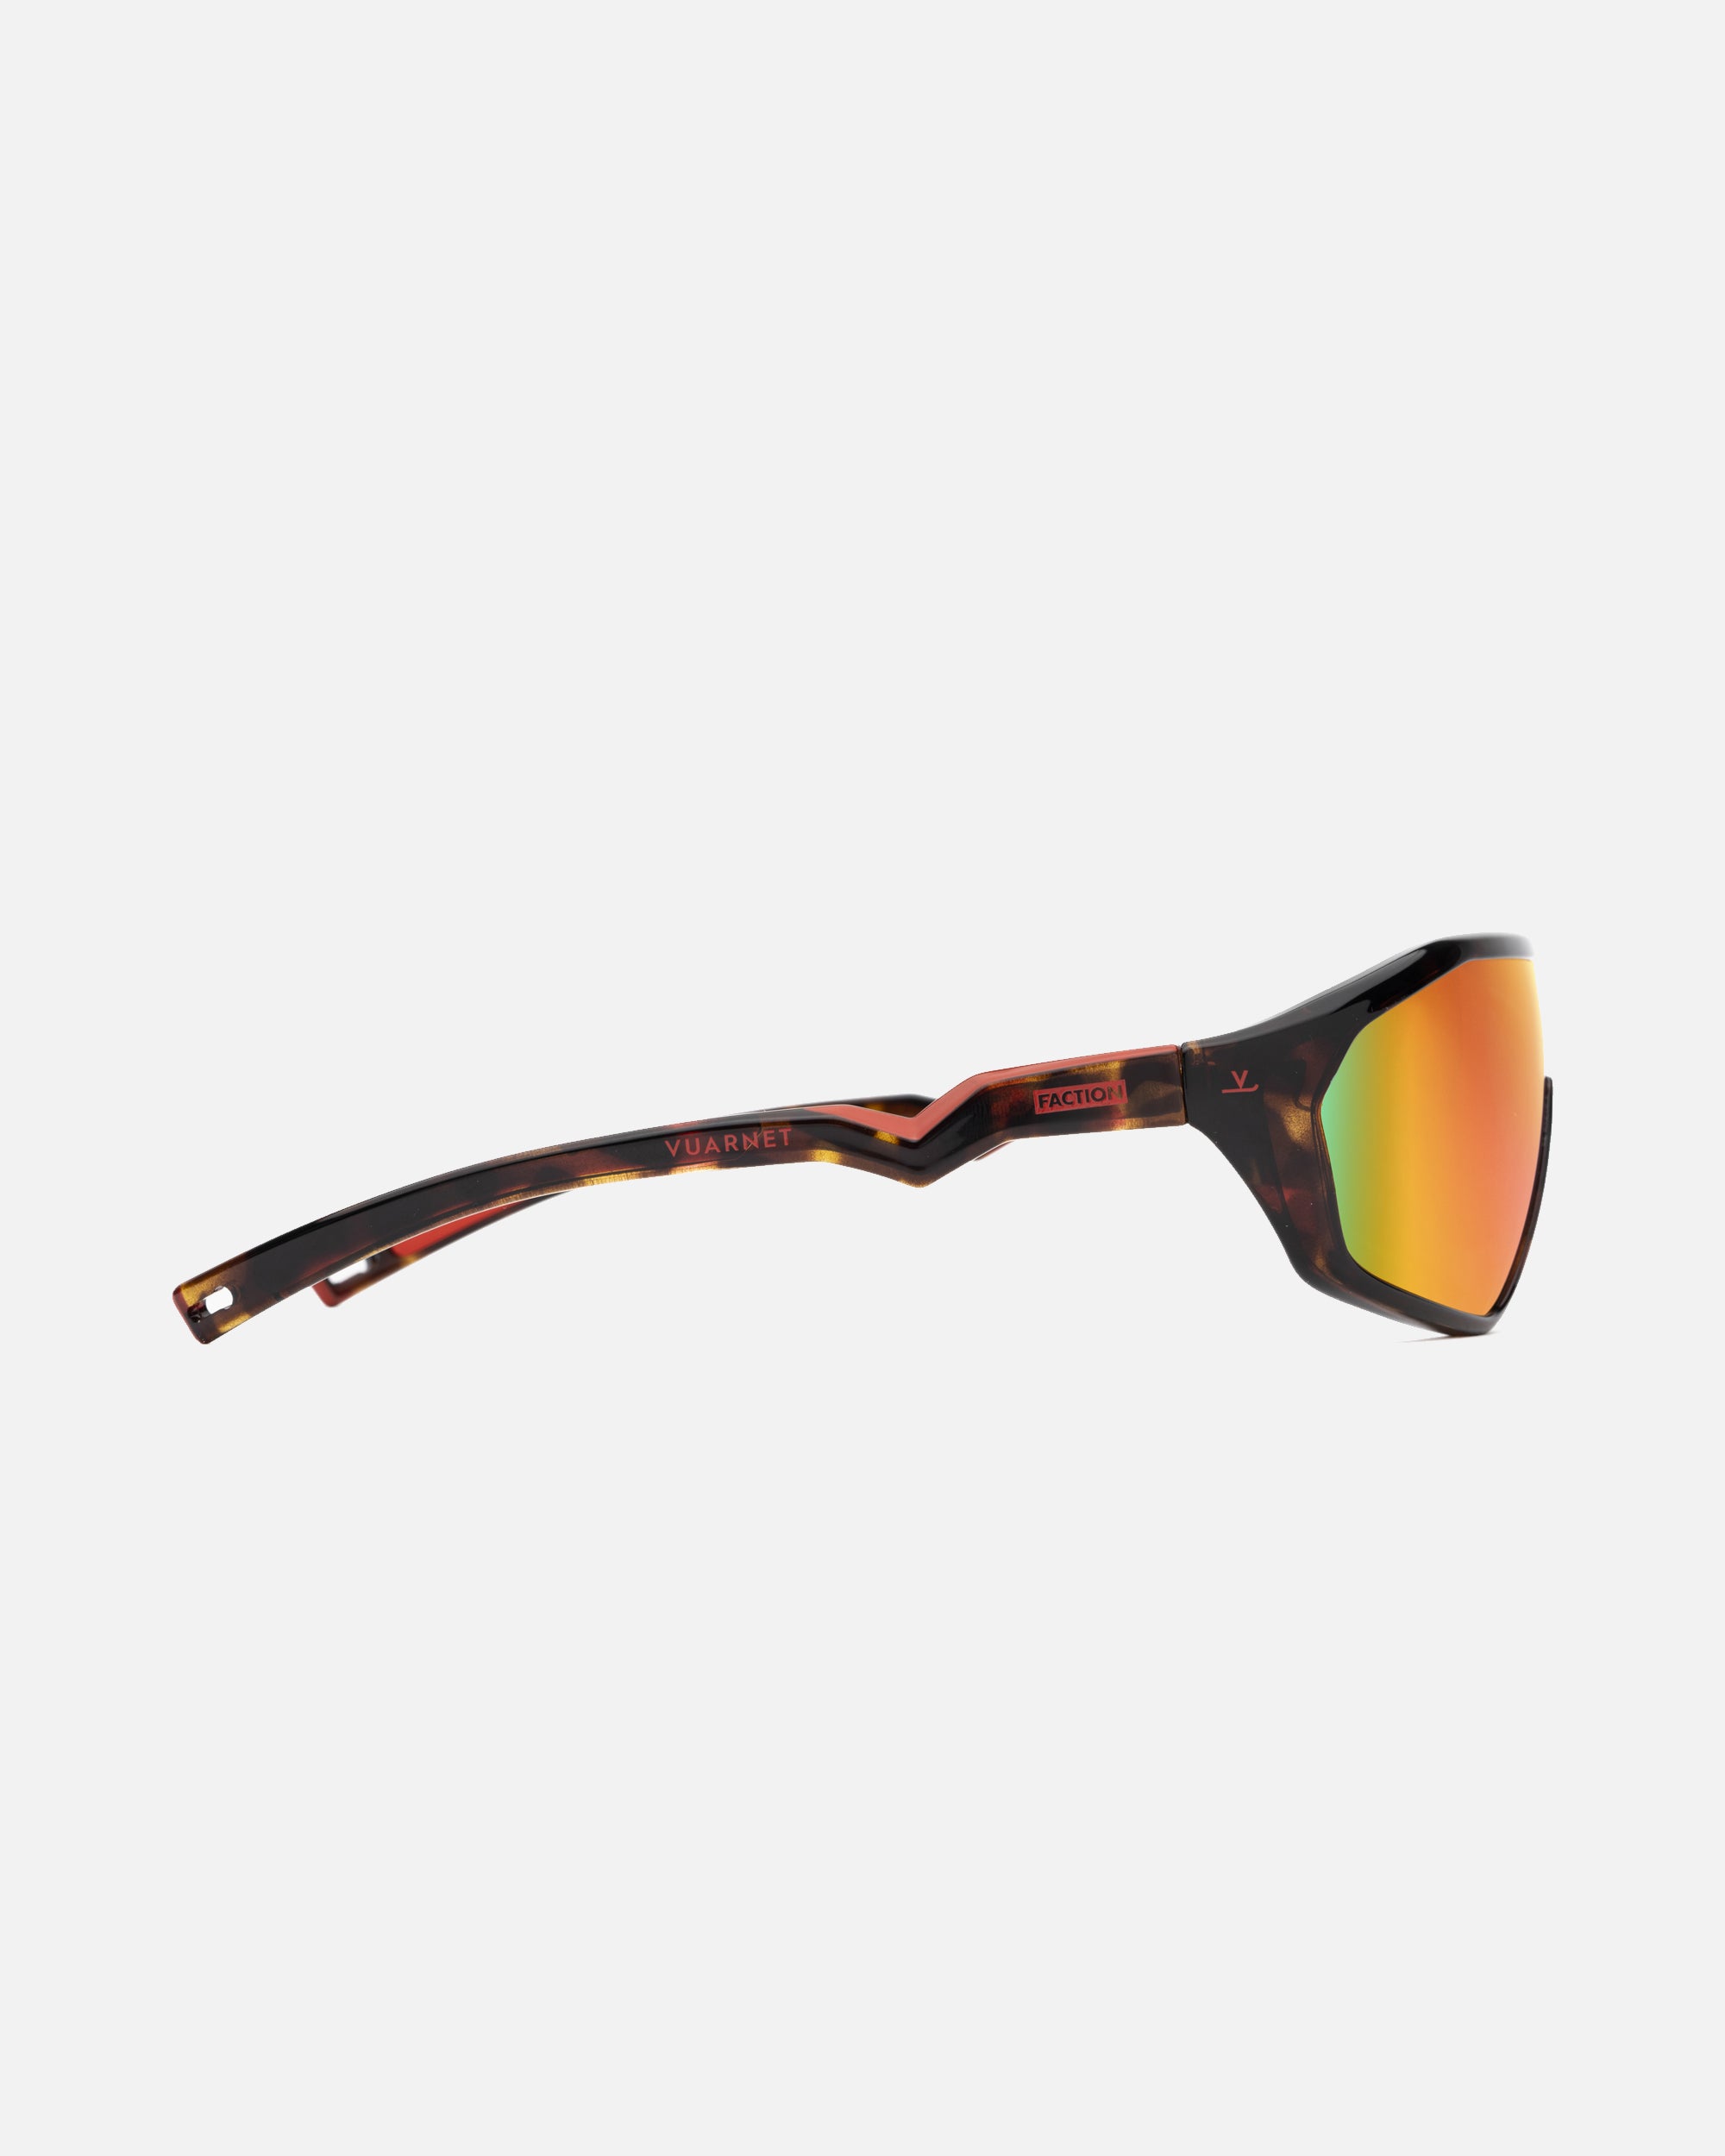 110 Sunglasses Frames by Vuarnet